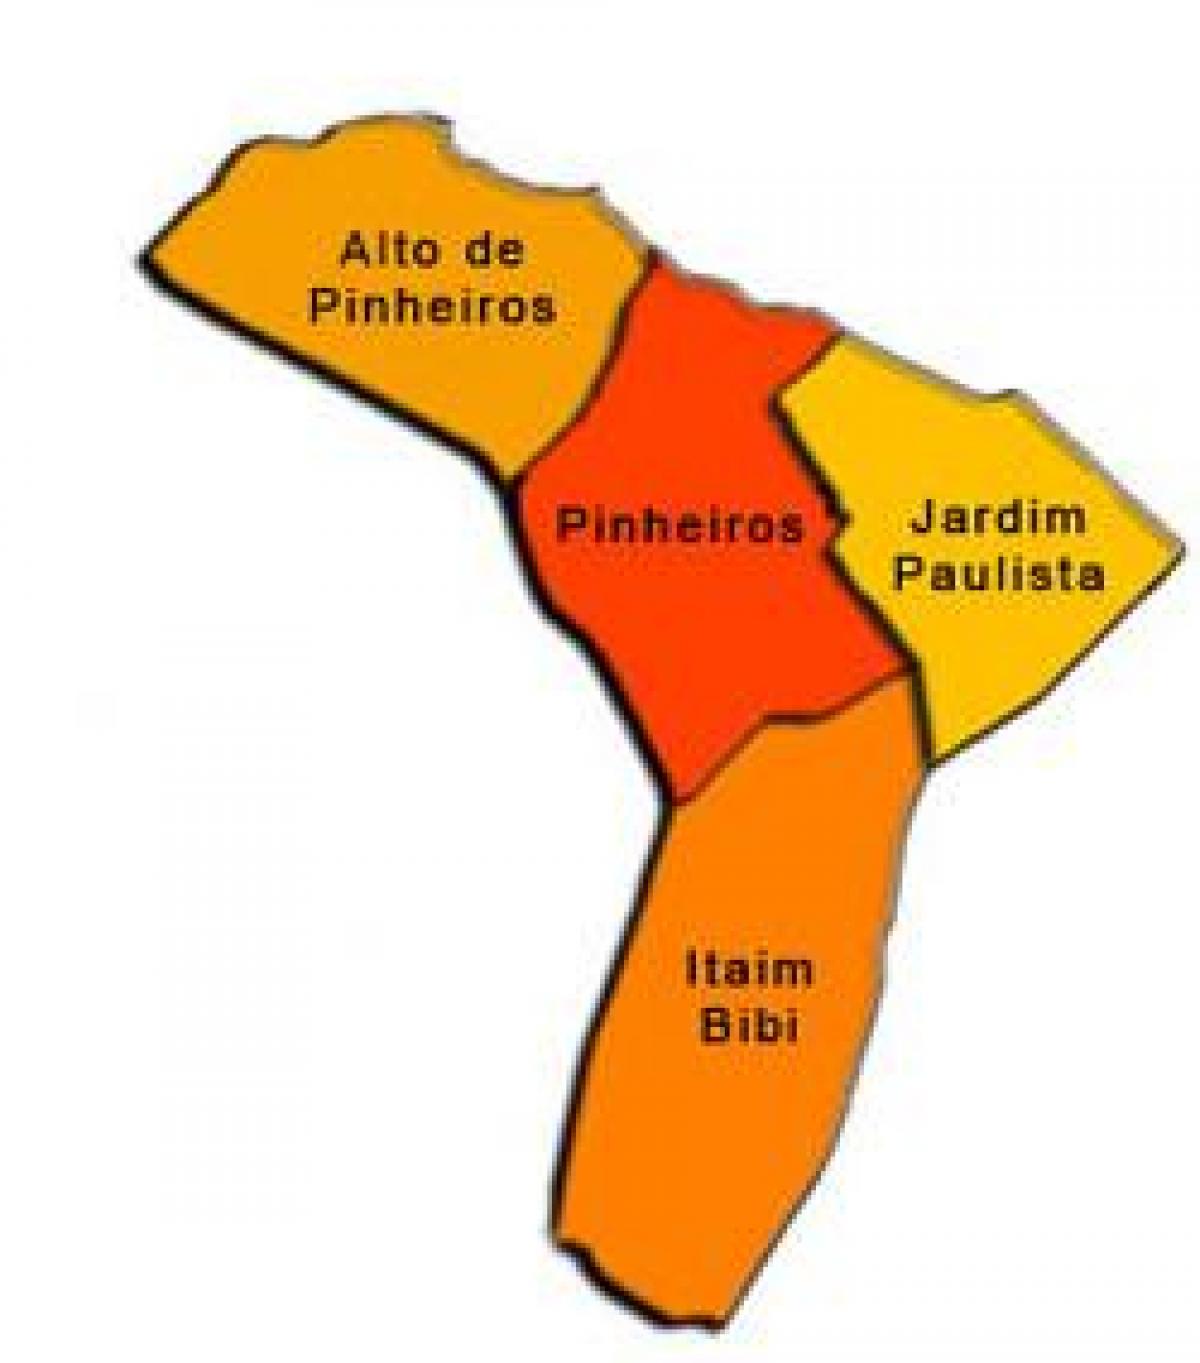 Mappa di Pinheiros sub-prefettura